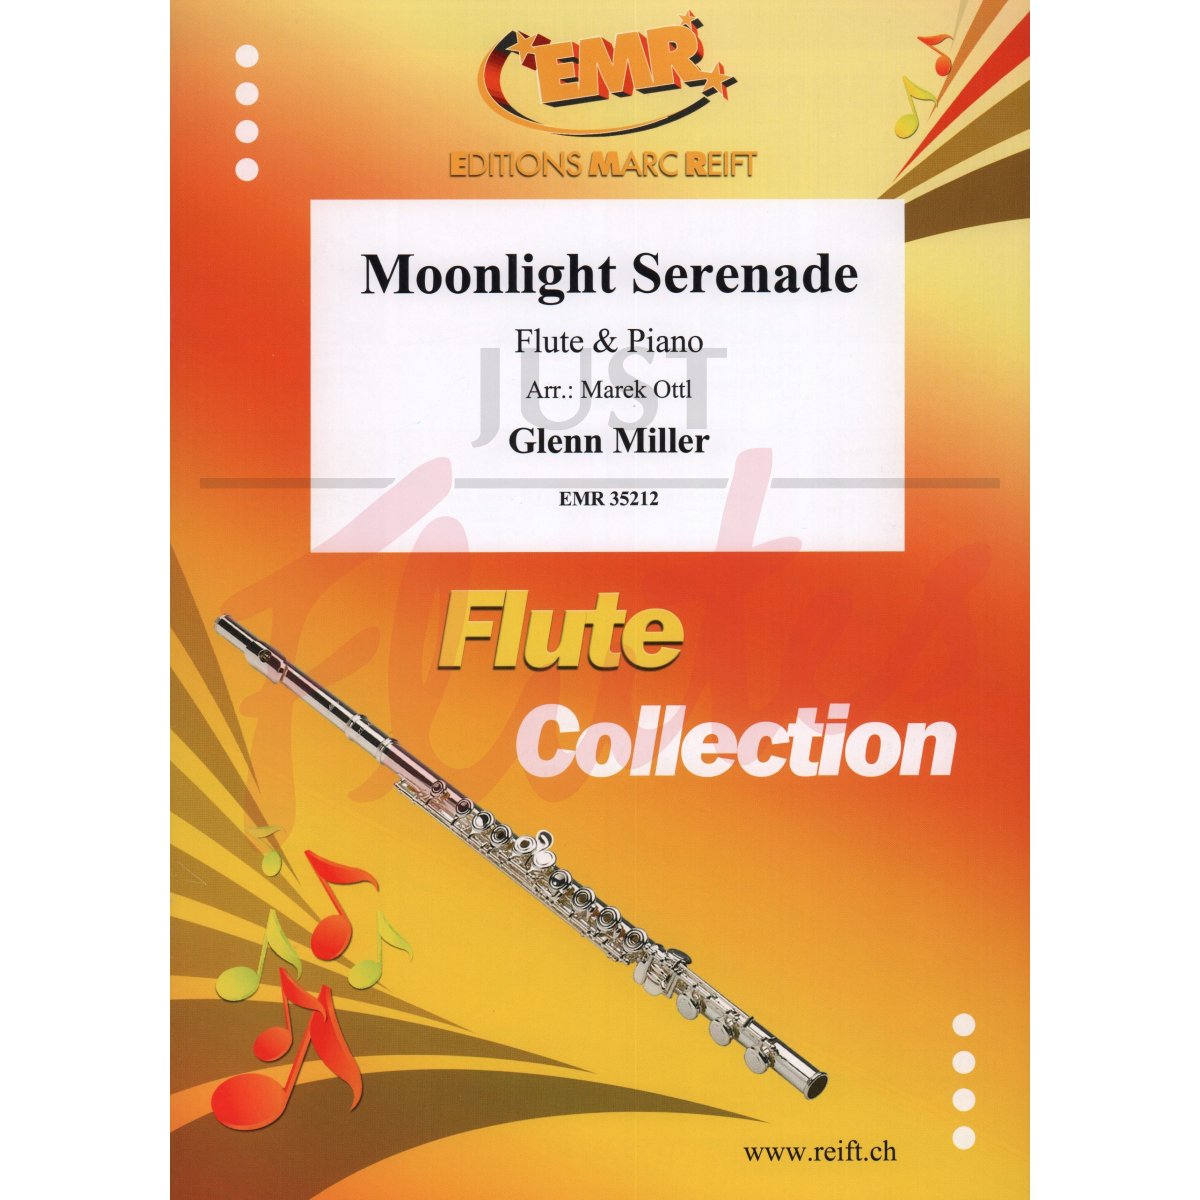 Moonlight Serenade for Flute and Piano